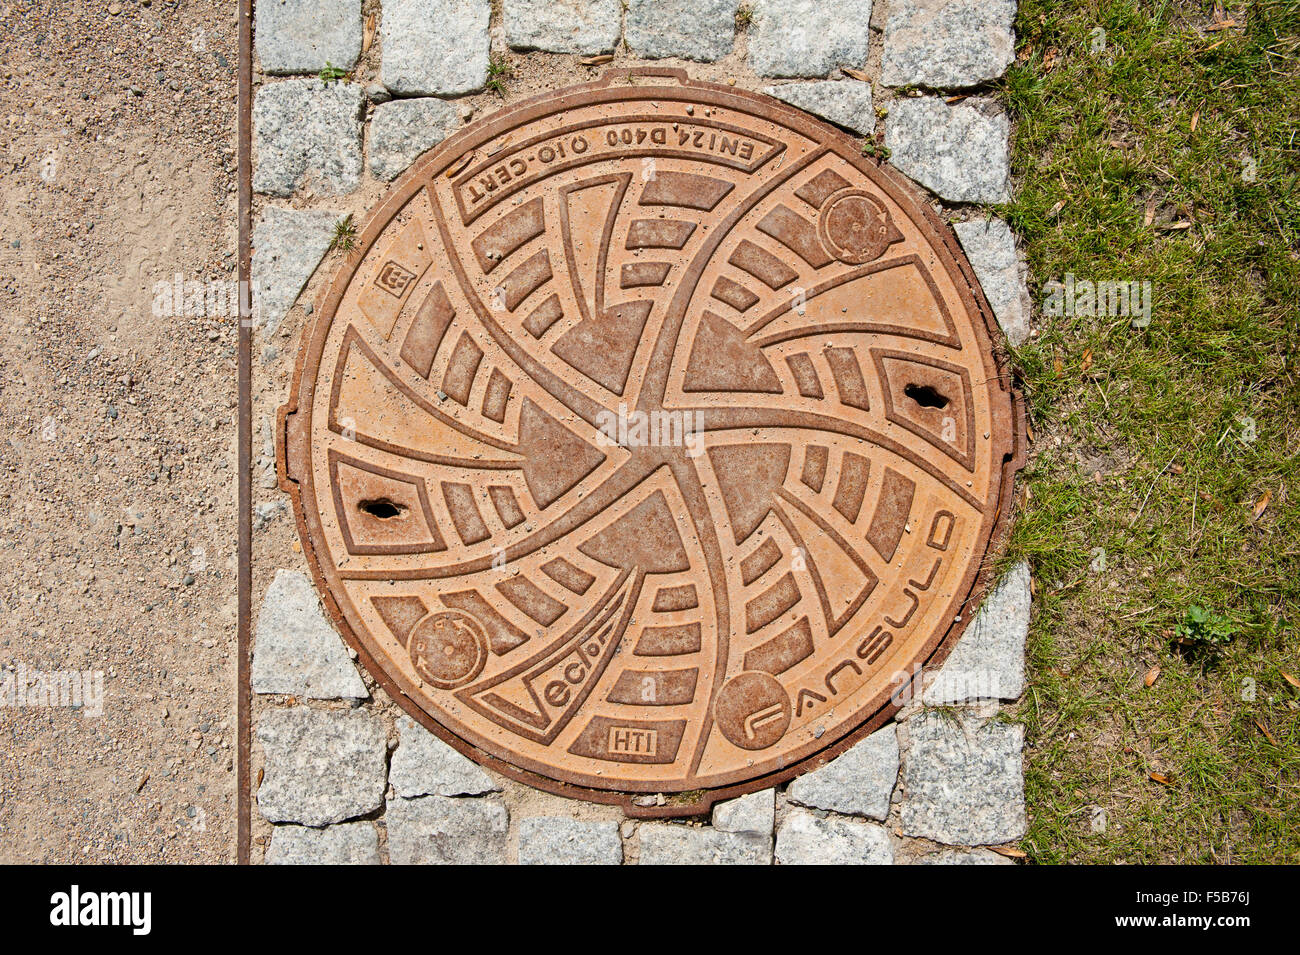 Ornamental brown manhole cover of sewage well by Fansuld in park Lazienki Krolewskie w Warszawie, Royal Baths Park, Warsaw... Stock Photo